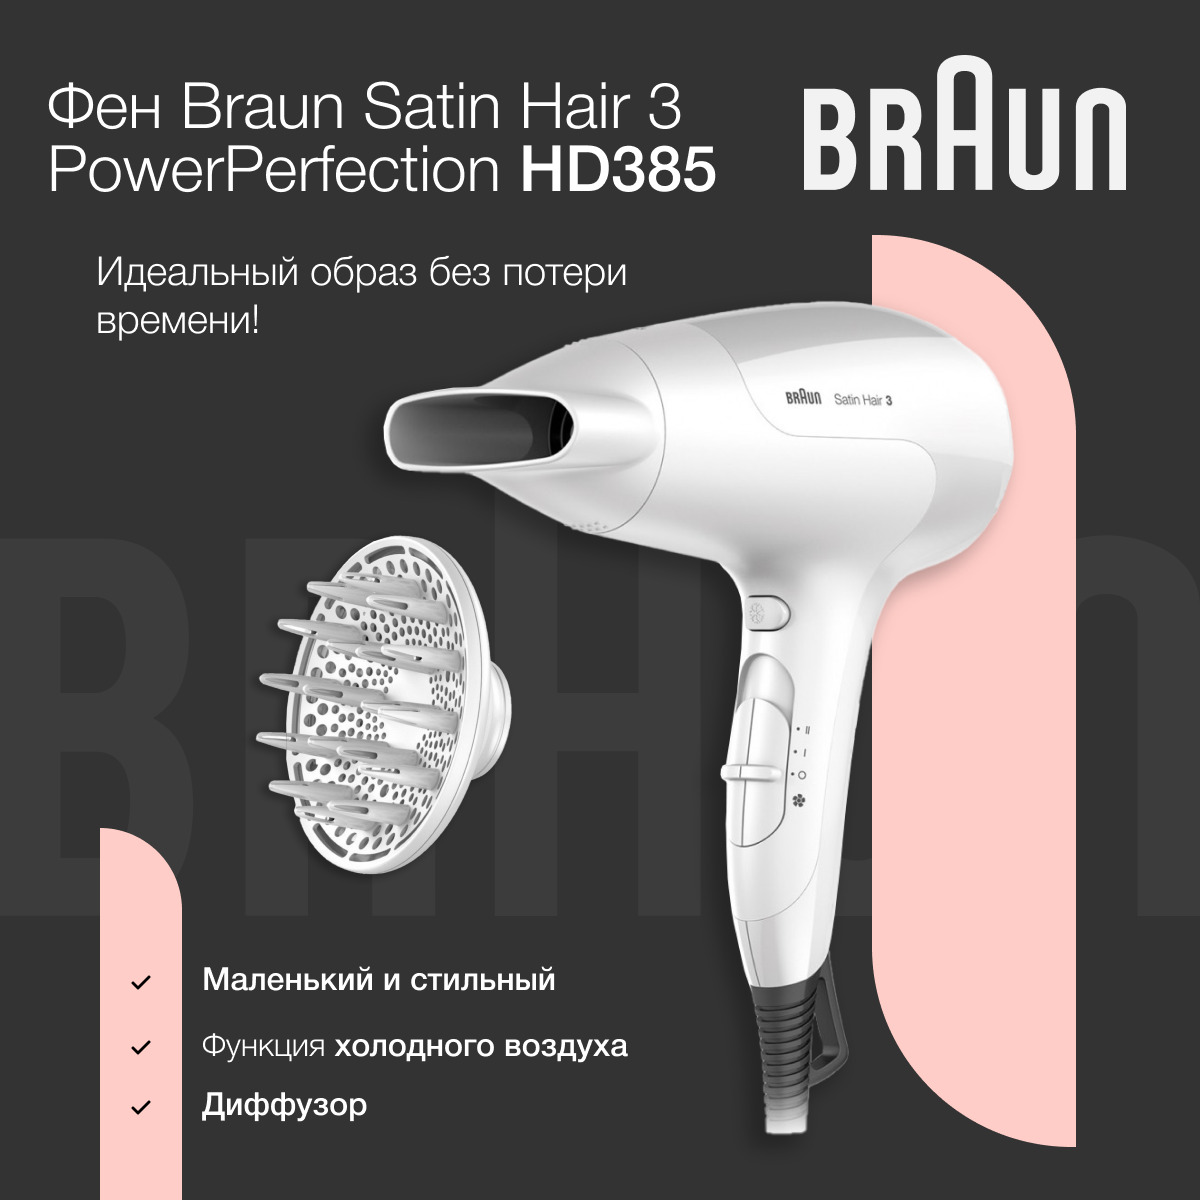 Характеристики Фен для волос Braun Satin Hair 3 PowerPerfection HD385,  насадка-диффузор, белый, подробное описание товара. Интернет-магазин OZON